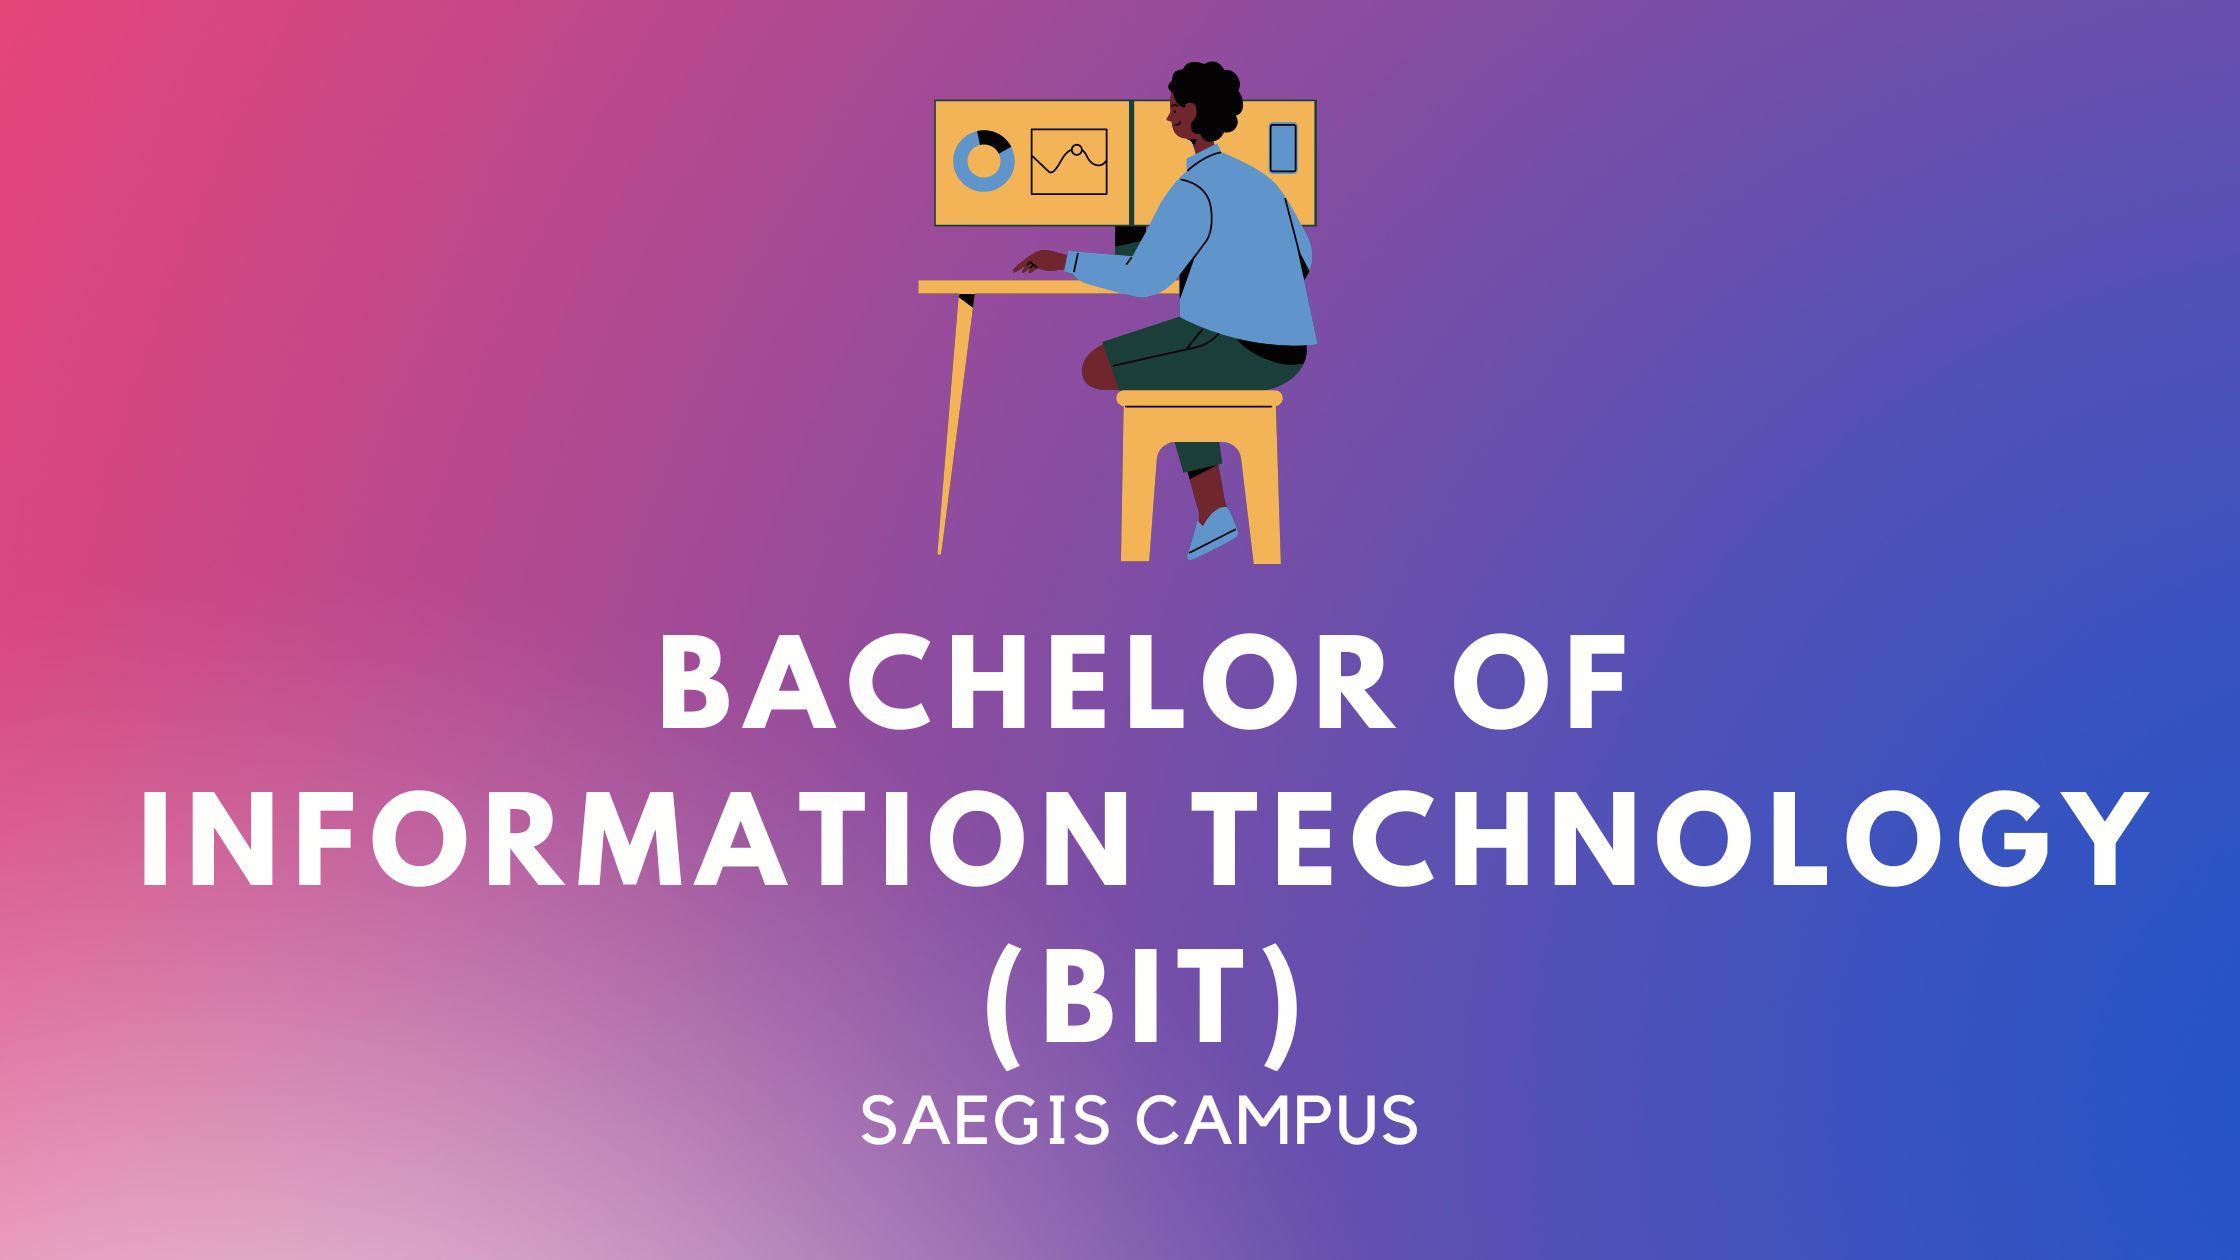 Bachelor of Information Technology (BIT) at Saegis Campus Sri Lanka - Sri Lanka Course